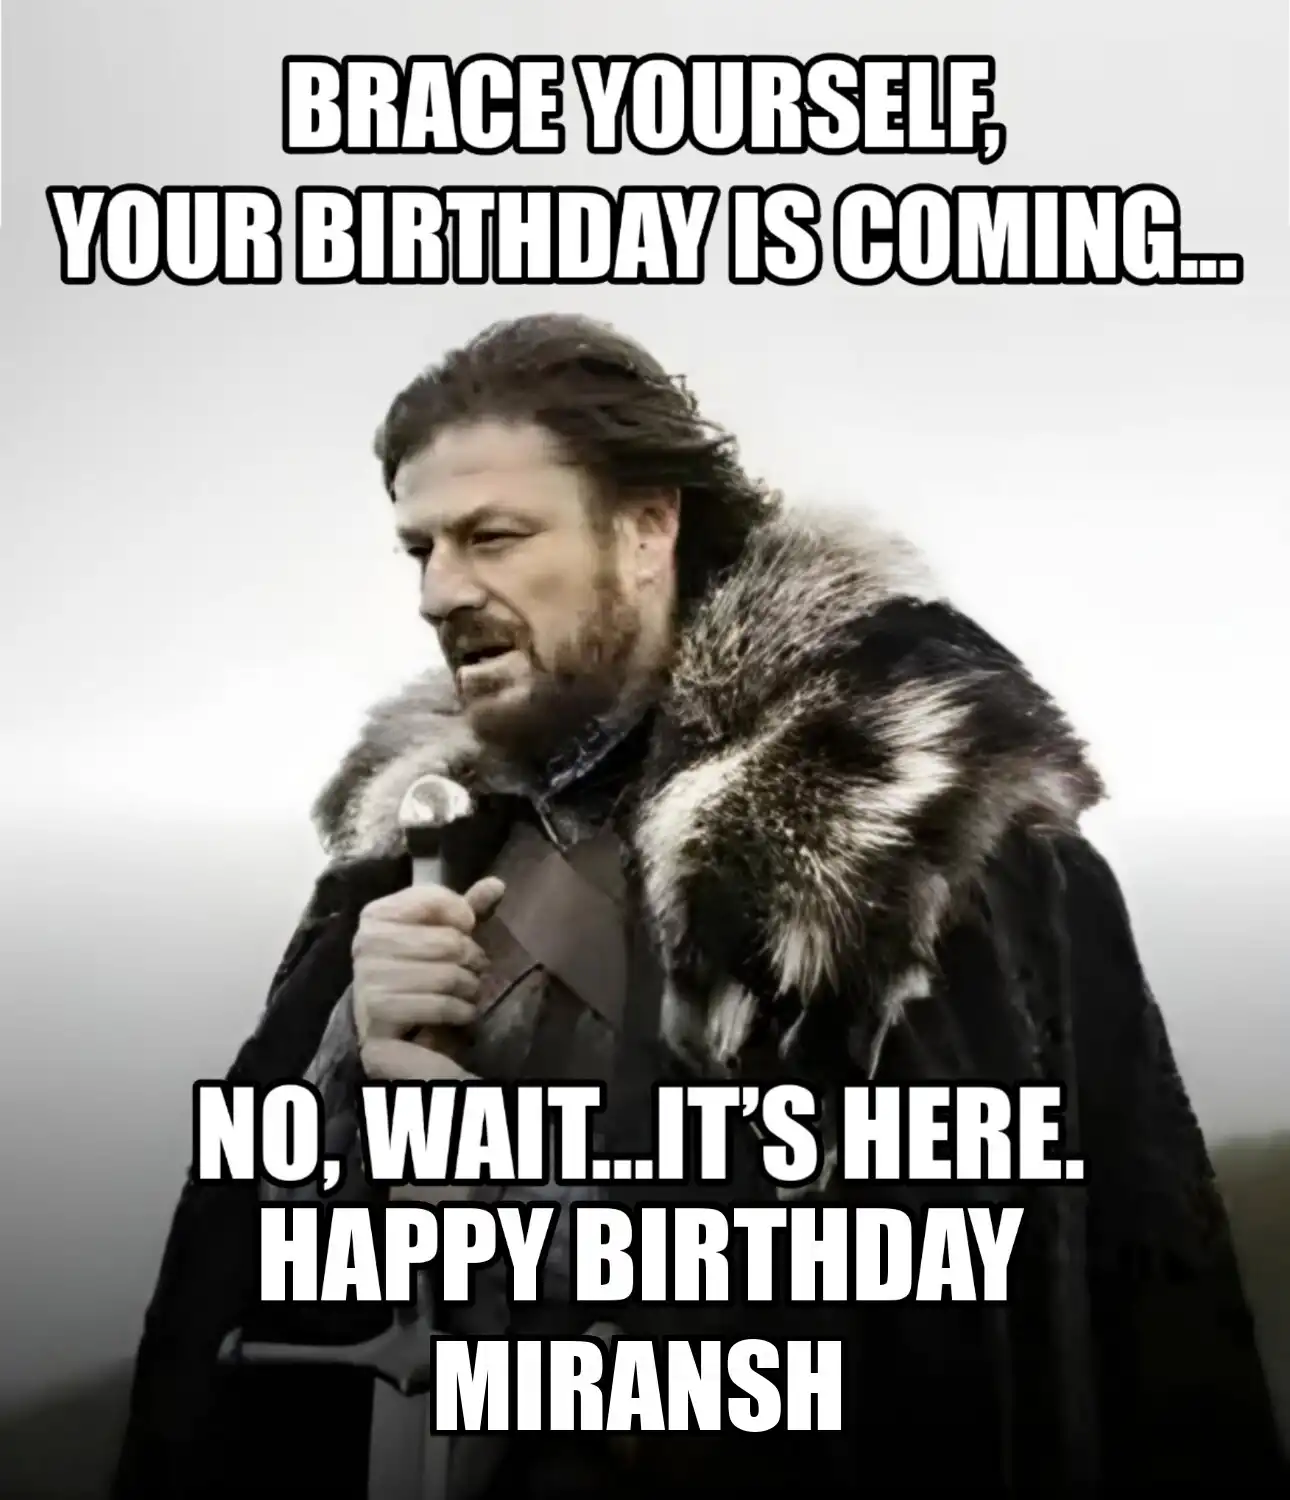 Happy Birthday Miransh Brace Yourself Your Birthday Is Coming Meme